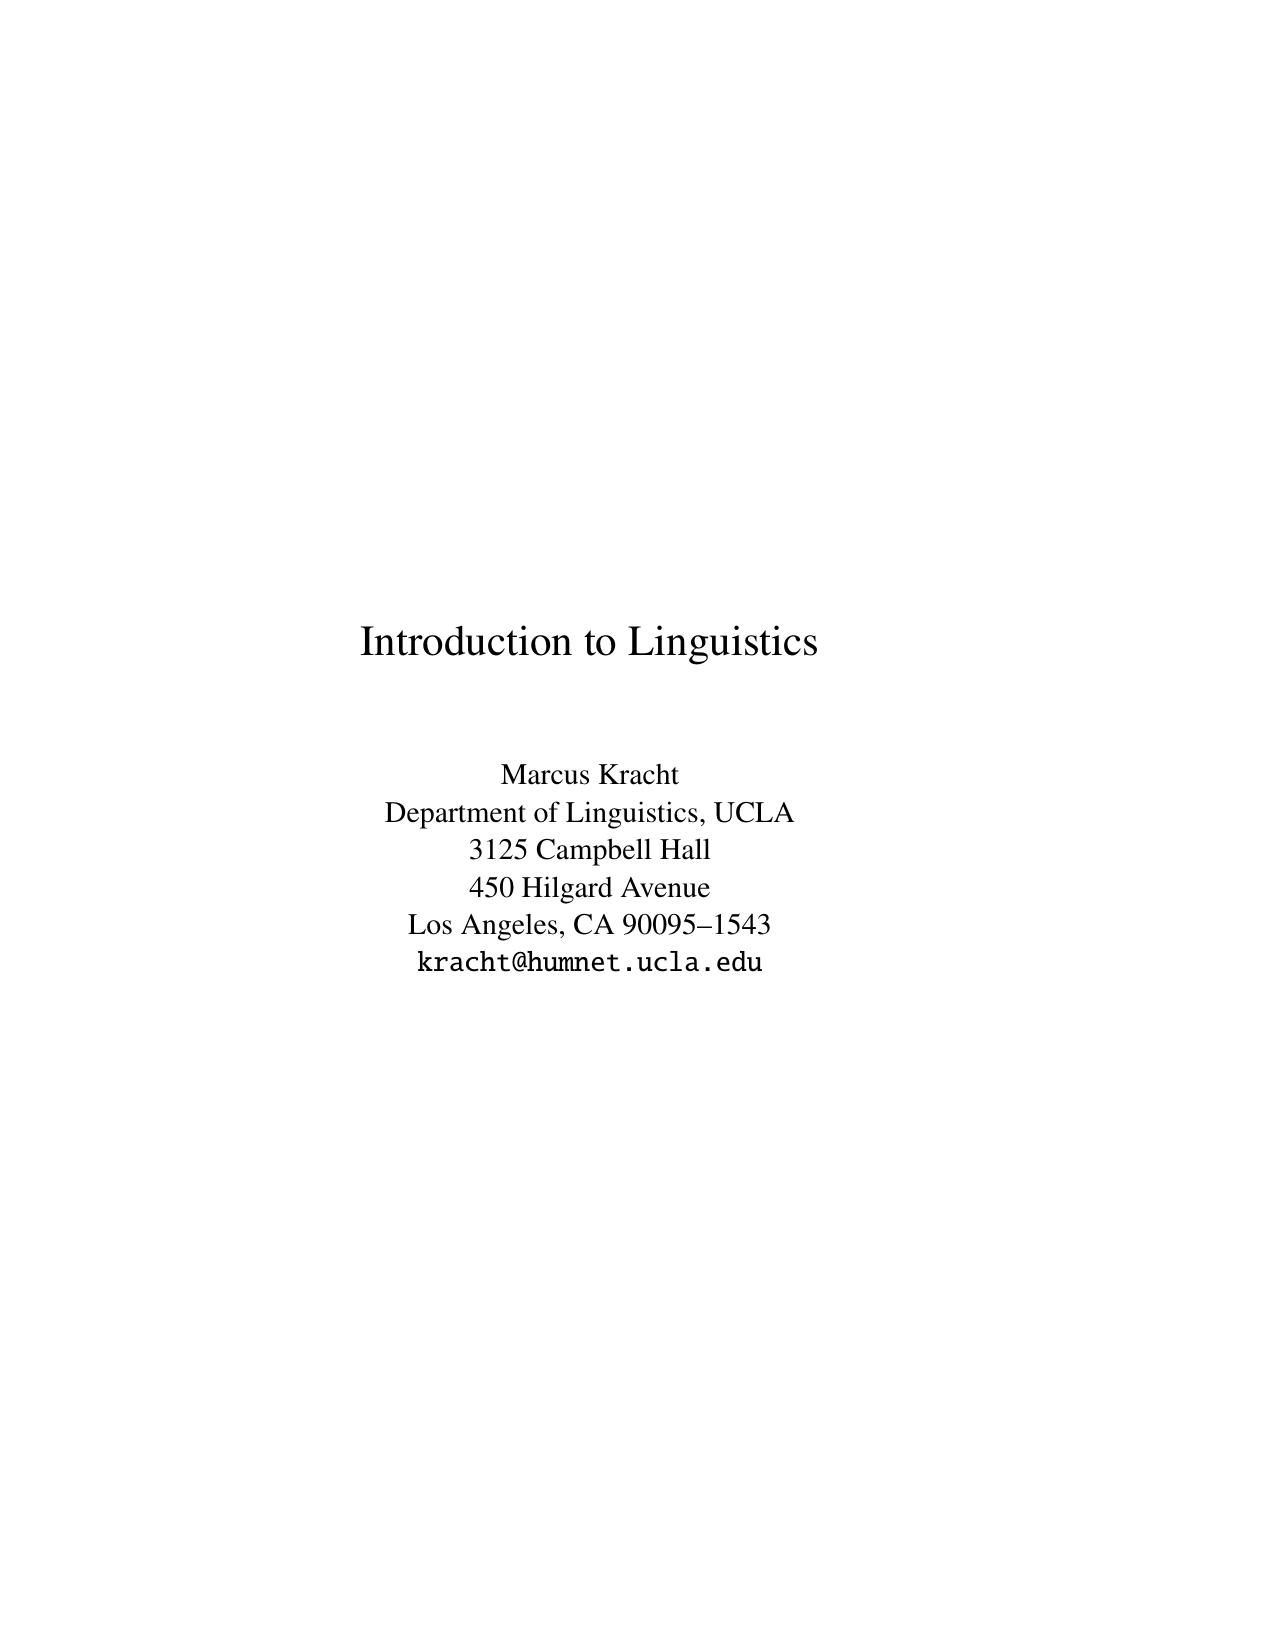 Introduction to Linguistics 2009